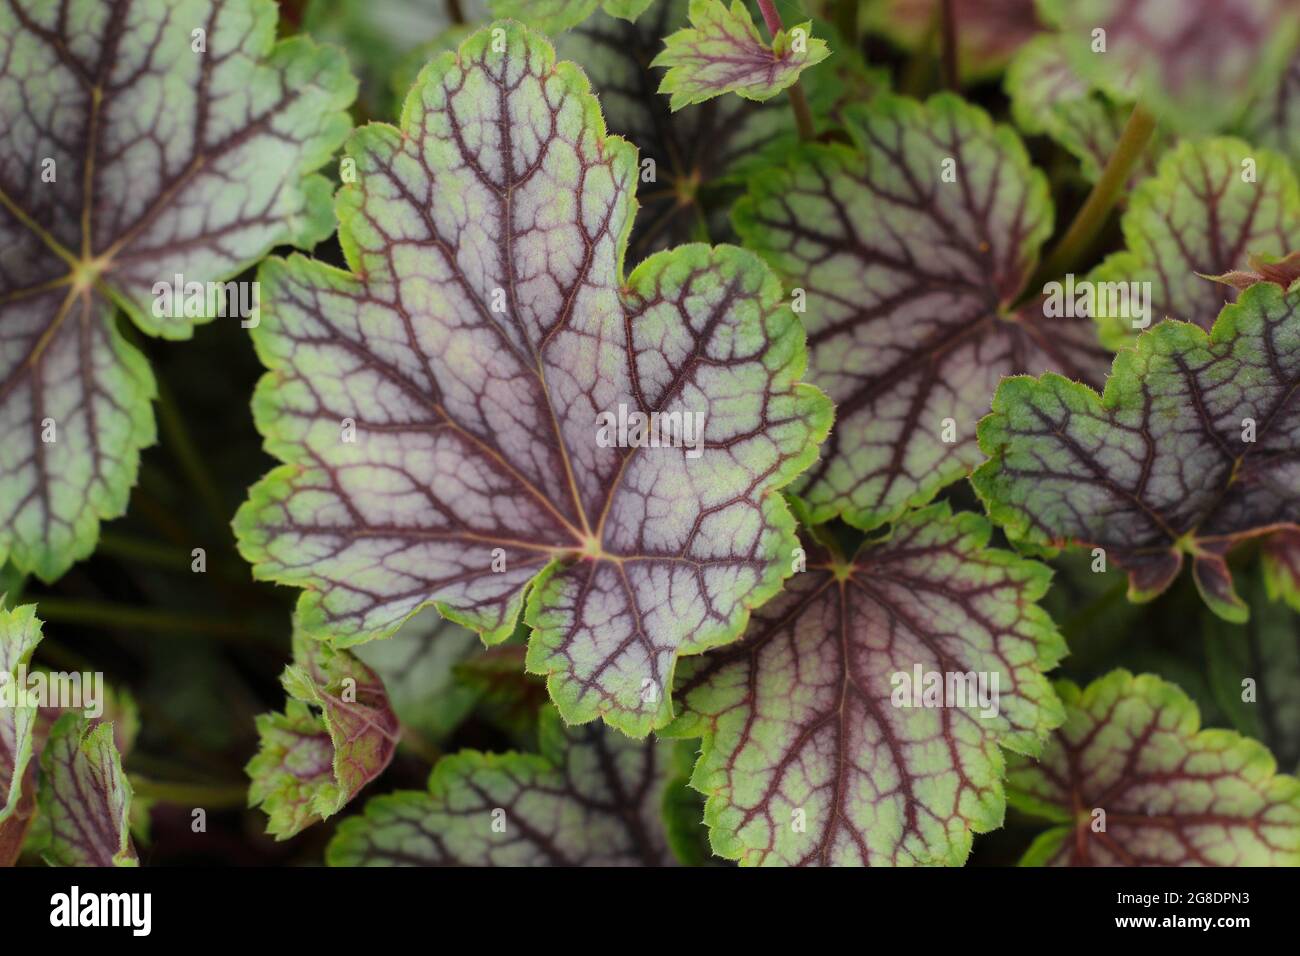 Heuchera 'Green Spice' displaying characteristic green purple leaves Stock Photo